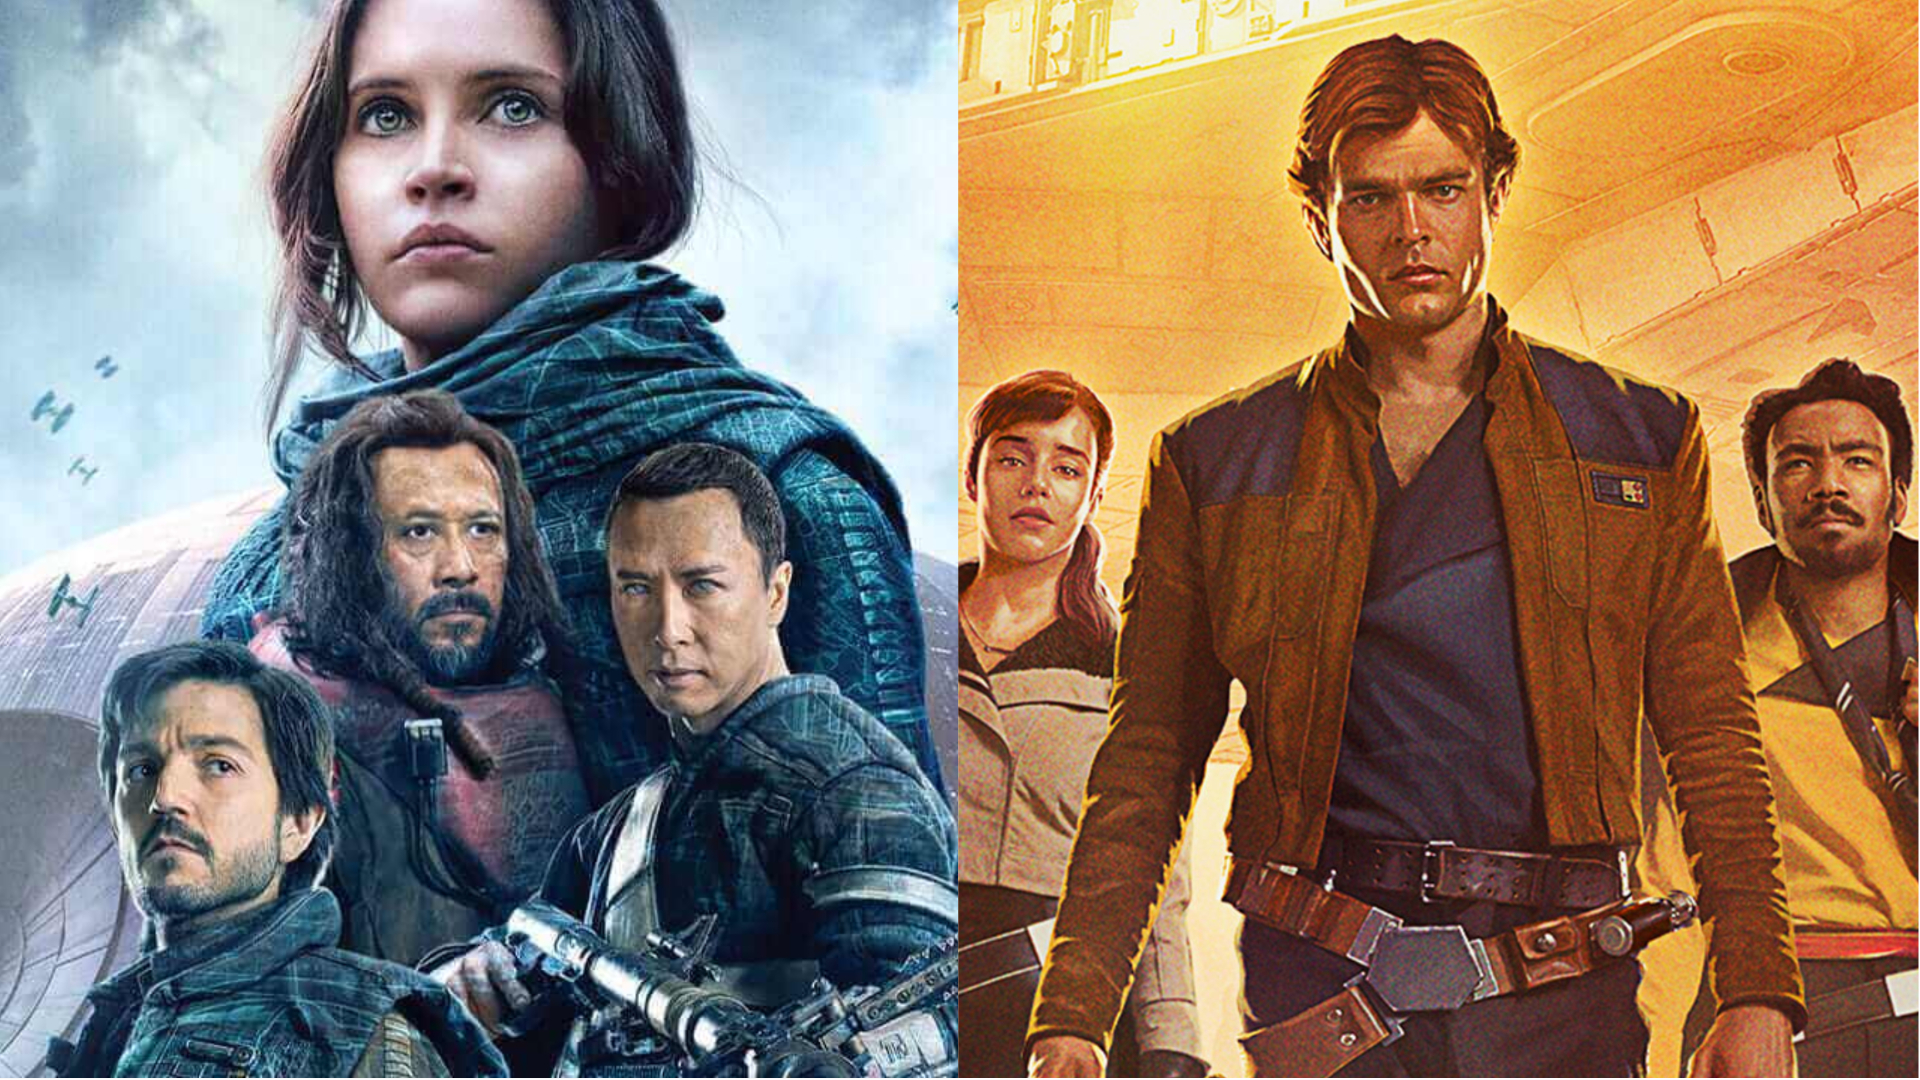 Star Wars backlash: Disney STOPS Rian Johnson trilogy? New information, Films, Entertainment